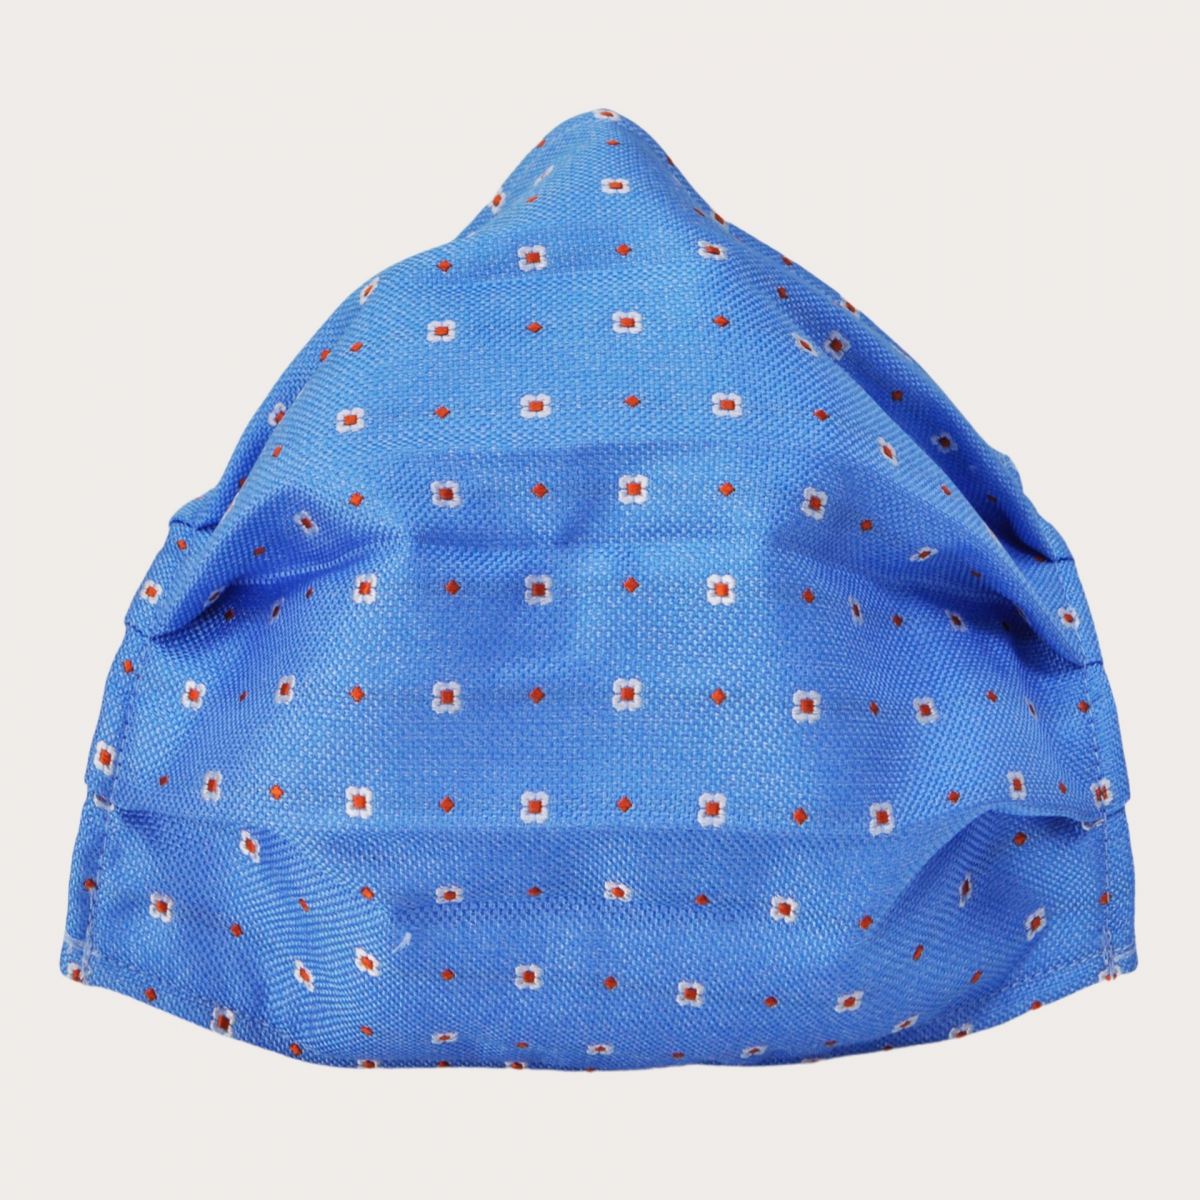 StyleMask Masque facial filtrant en soie, motif bleu clair avec des fleurs